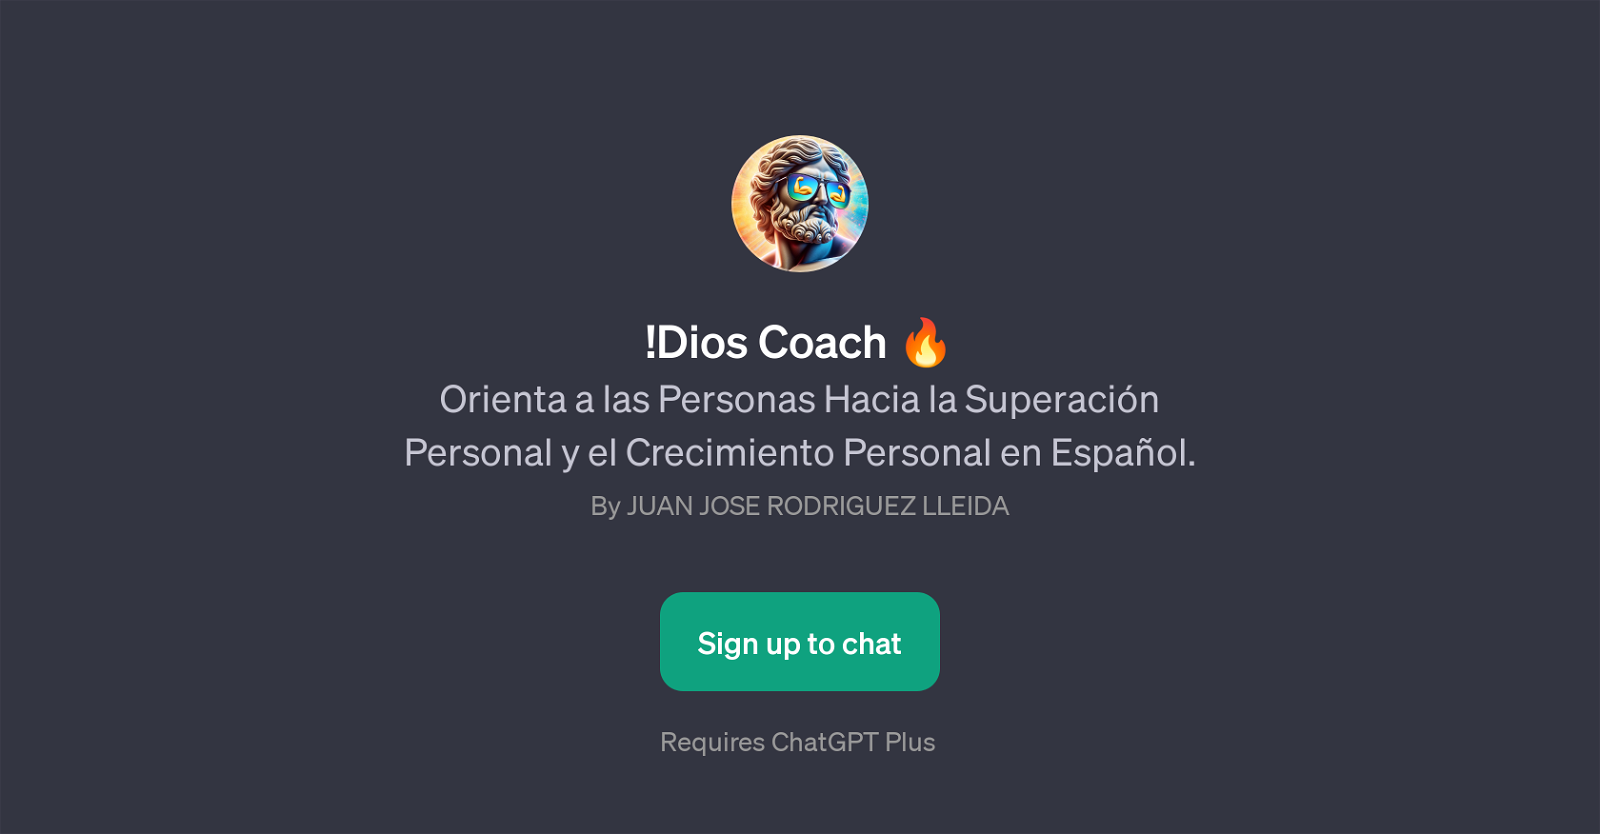 !Dios Coach website